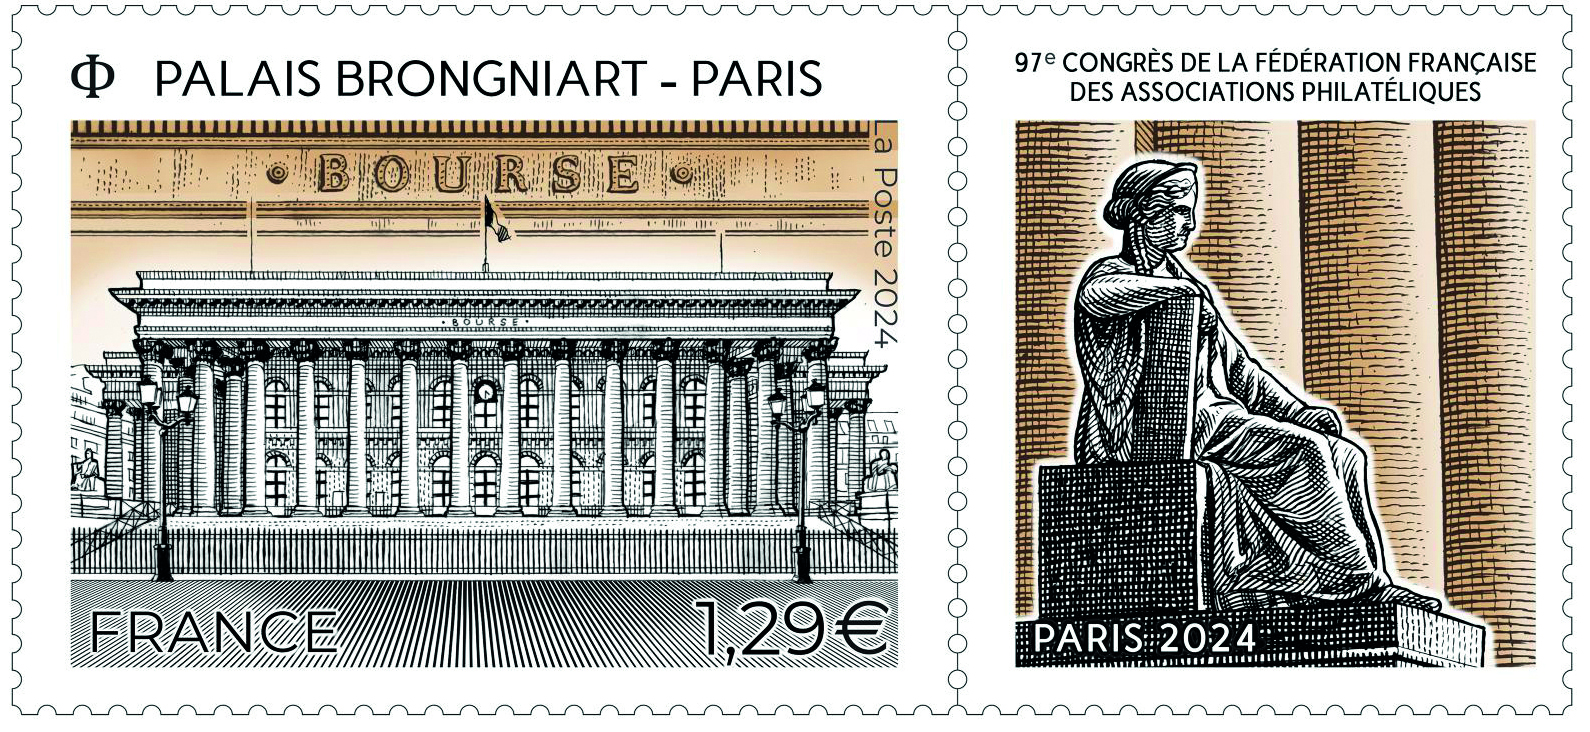 PALAIS BRONGNIART - PARIS 97e CONGRÈS DE LA FFAP